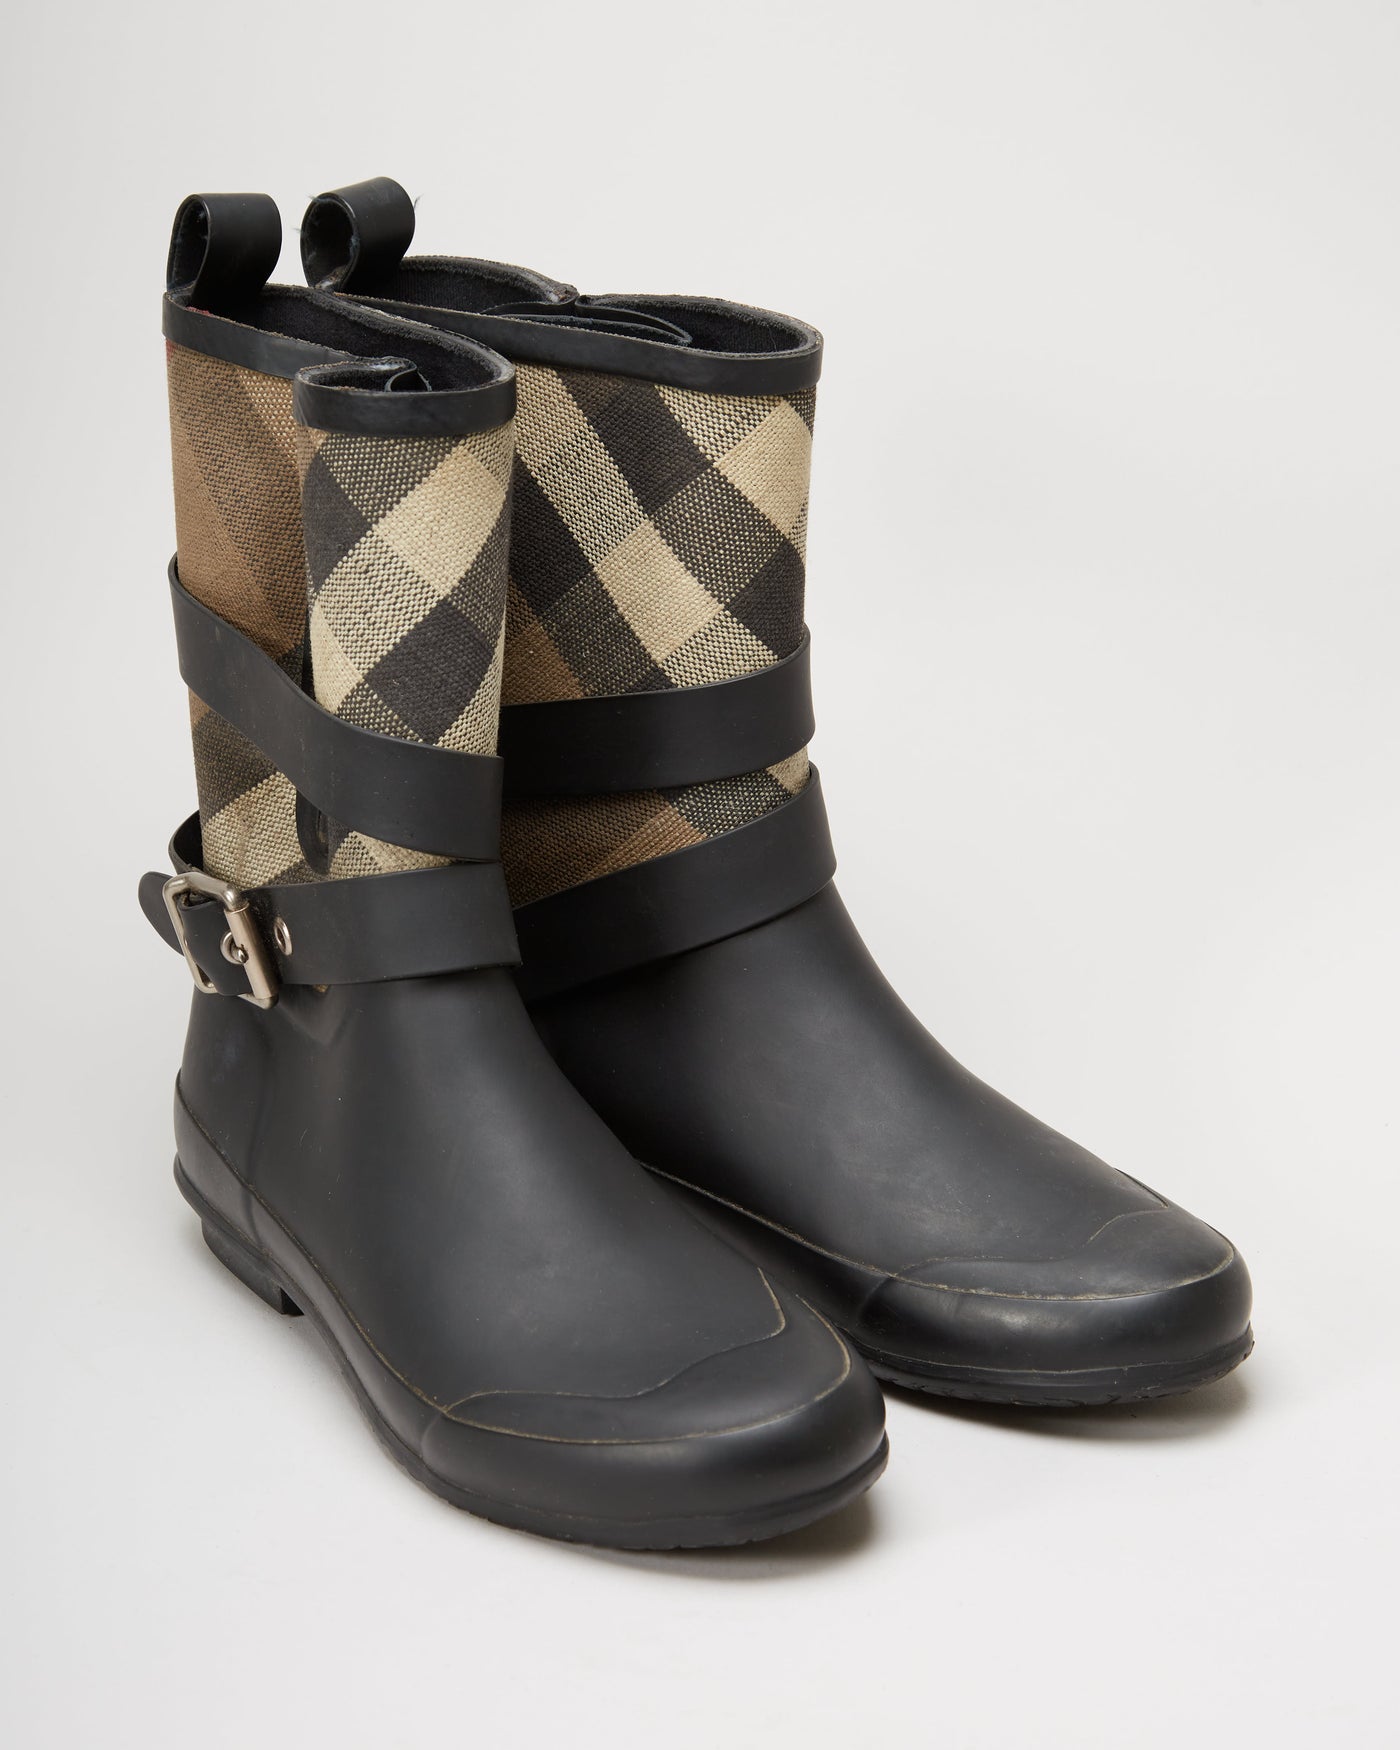 Burberry Black / Novacheck Wellies / Wellington Boots - UK 5